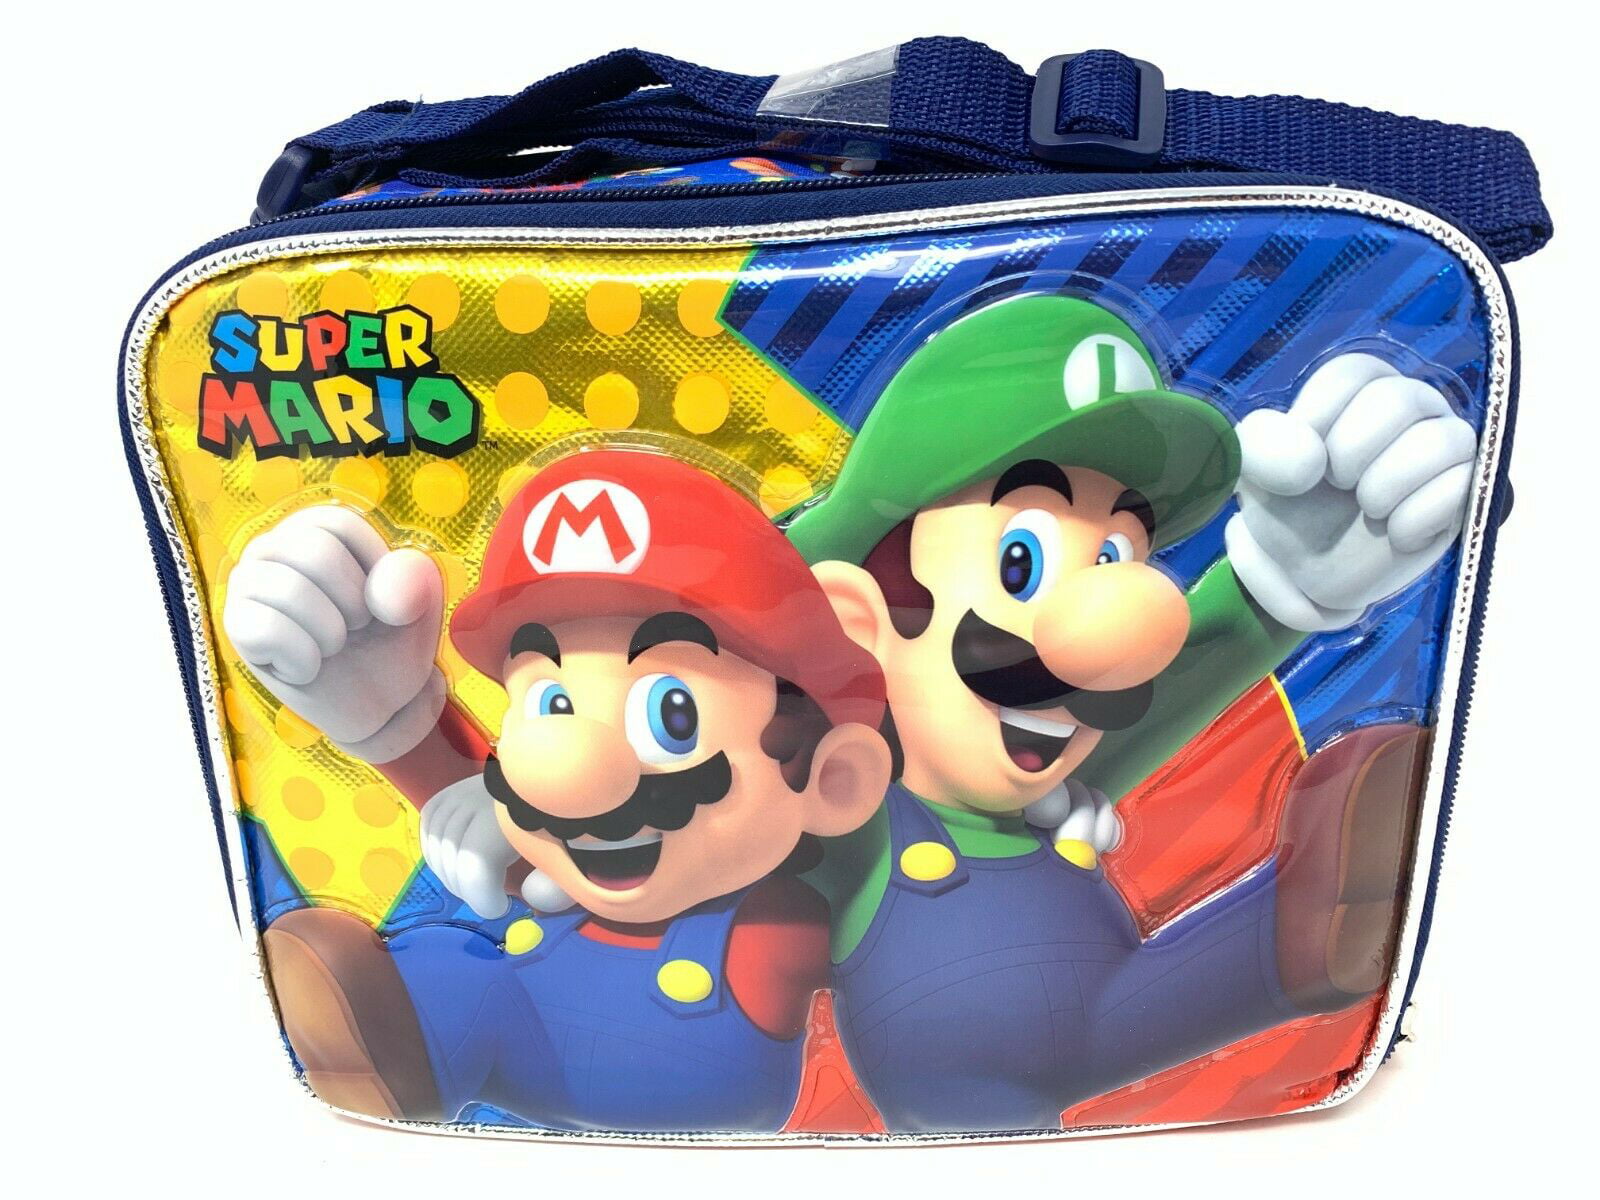 9.5 inch Super Mario Lunch Bag- Mario Yoshi Luigi Donkey Kong Lunch Box, Men's, Size: 7.5